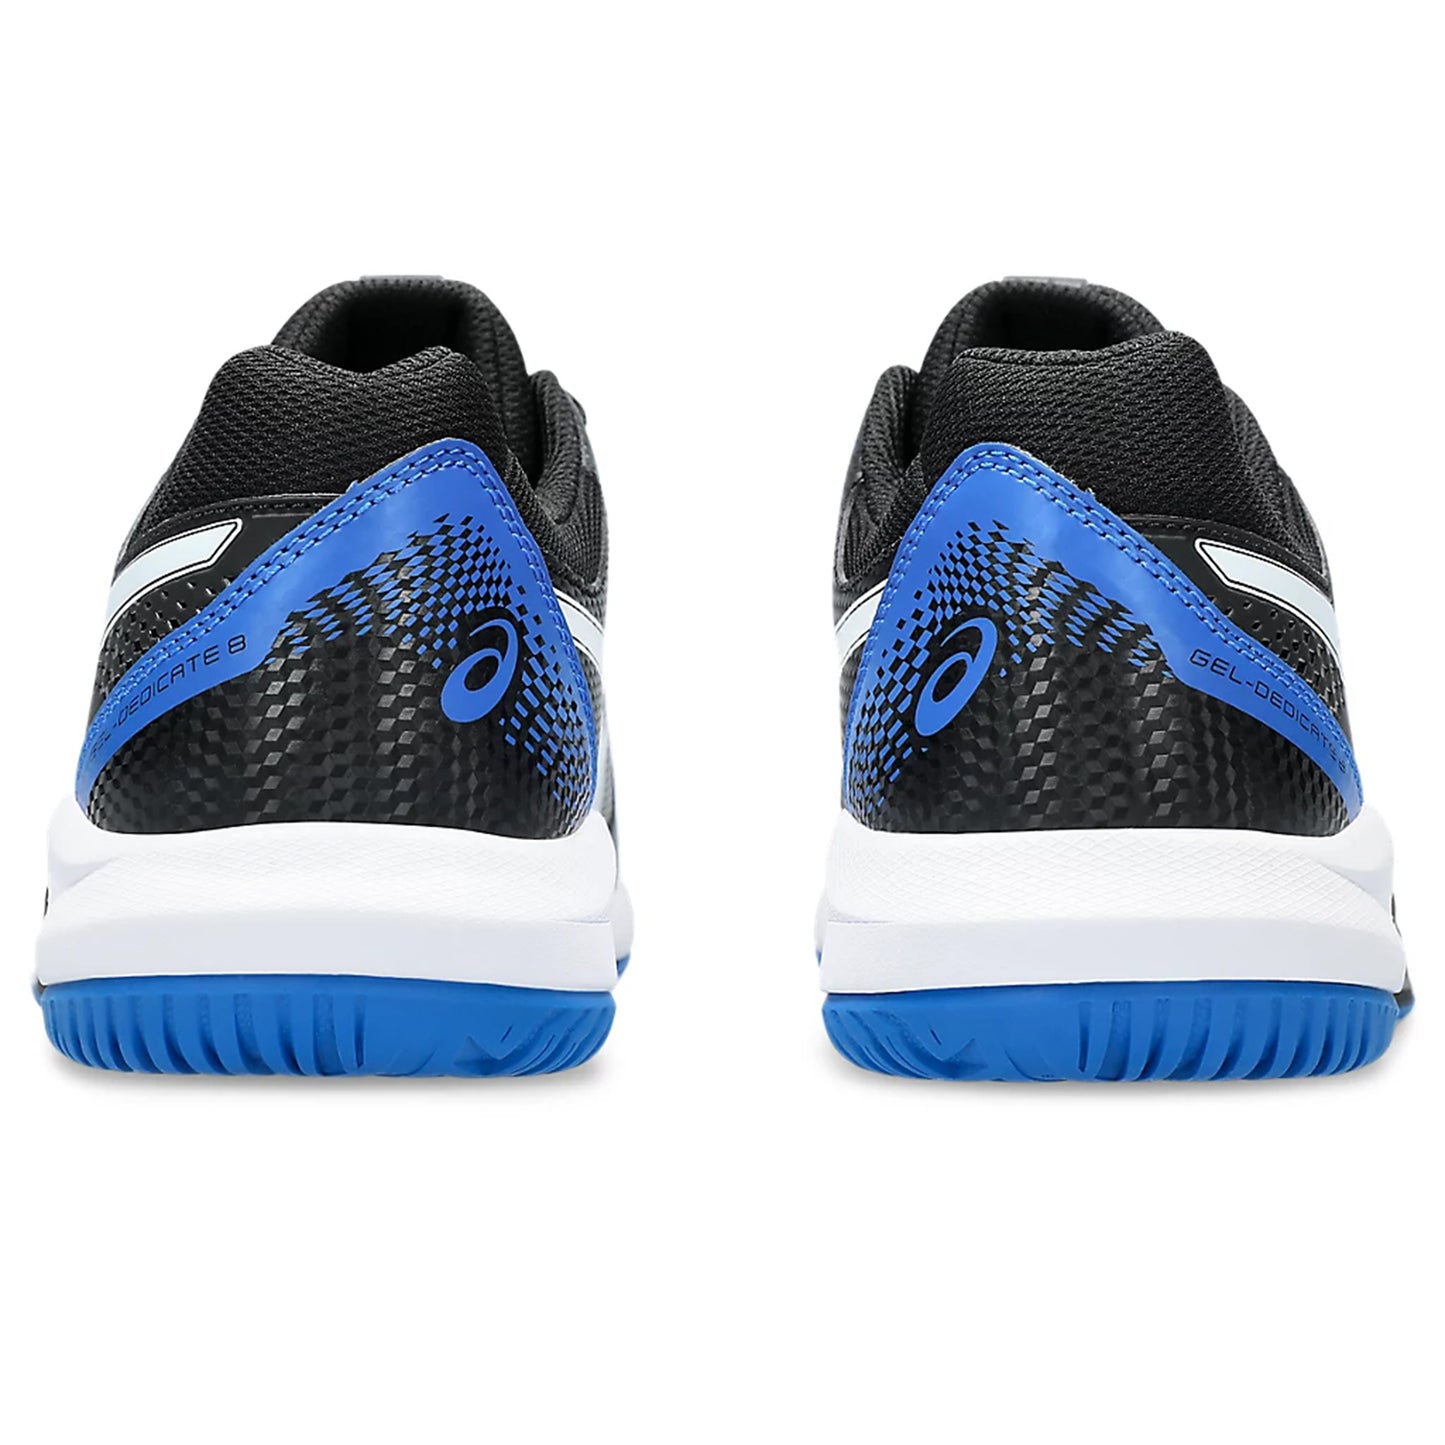 Asics Gel Dedicate 8 Men's Tennis Shoes - Best Price online Prokicksports.com